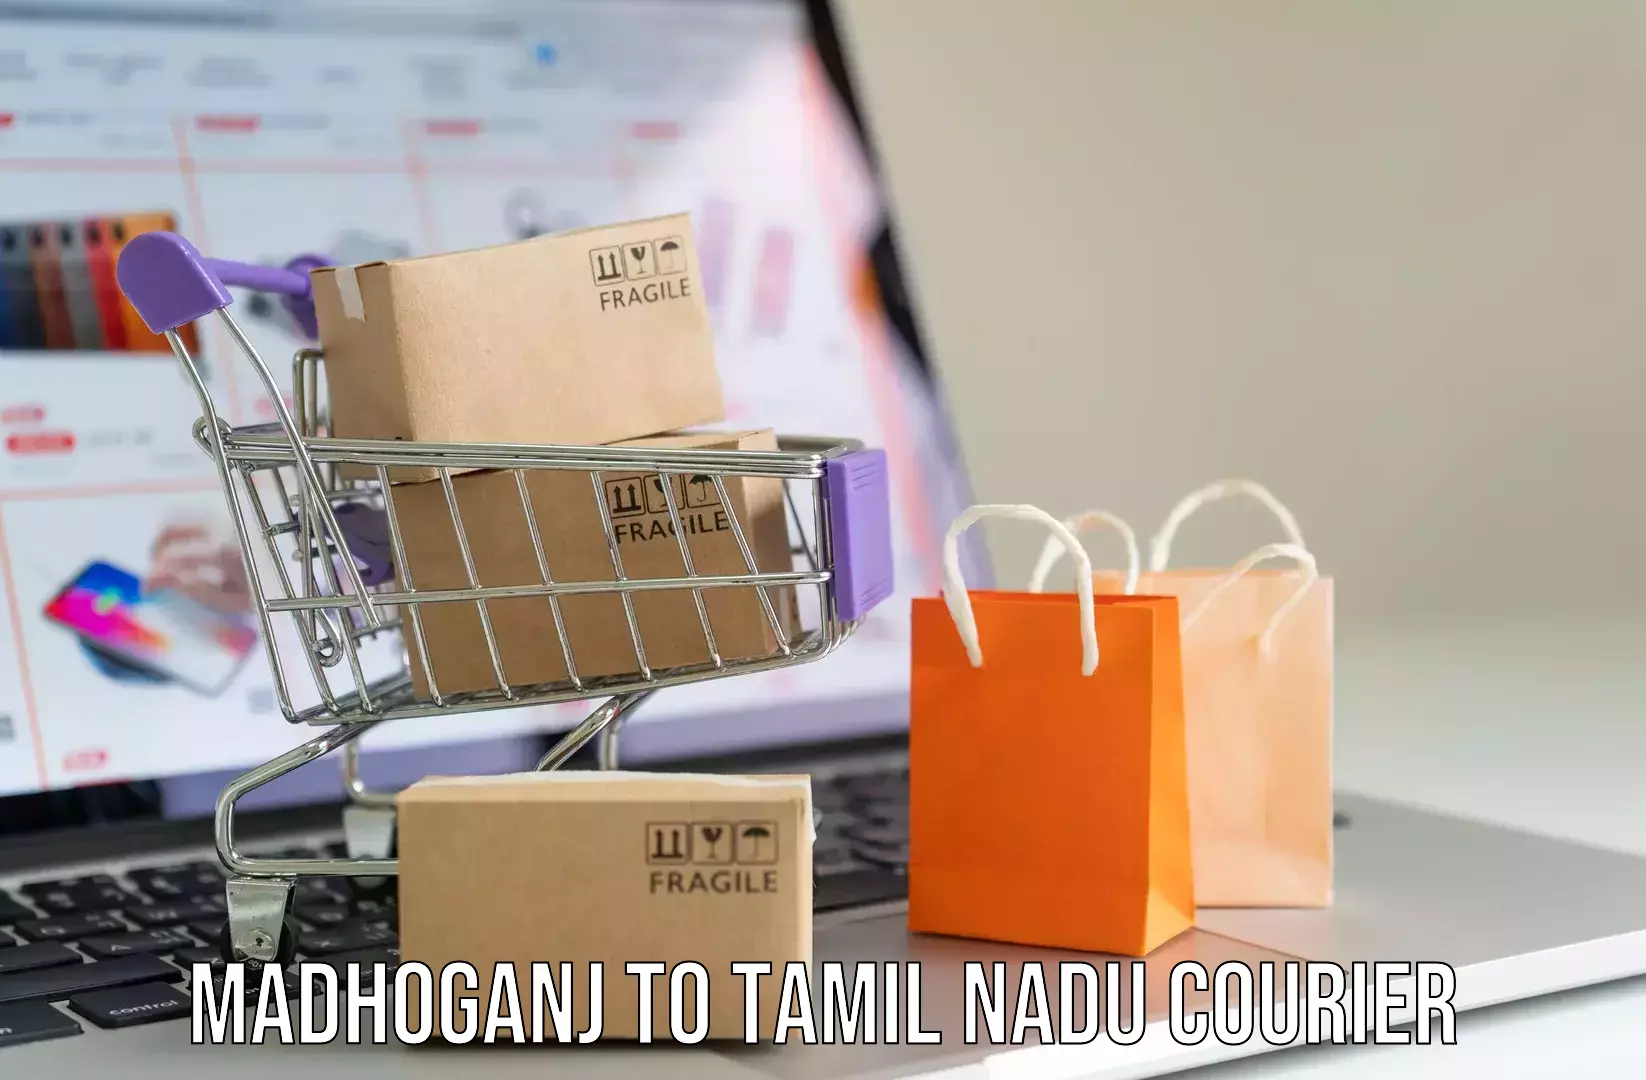 Luggage storage and delivery Madhoganj to Palayankottai